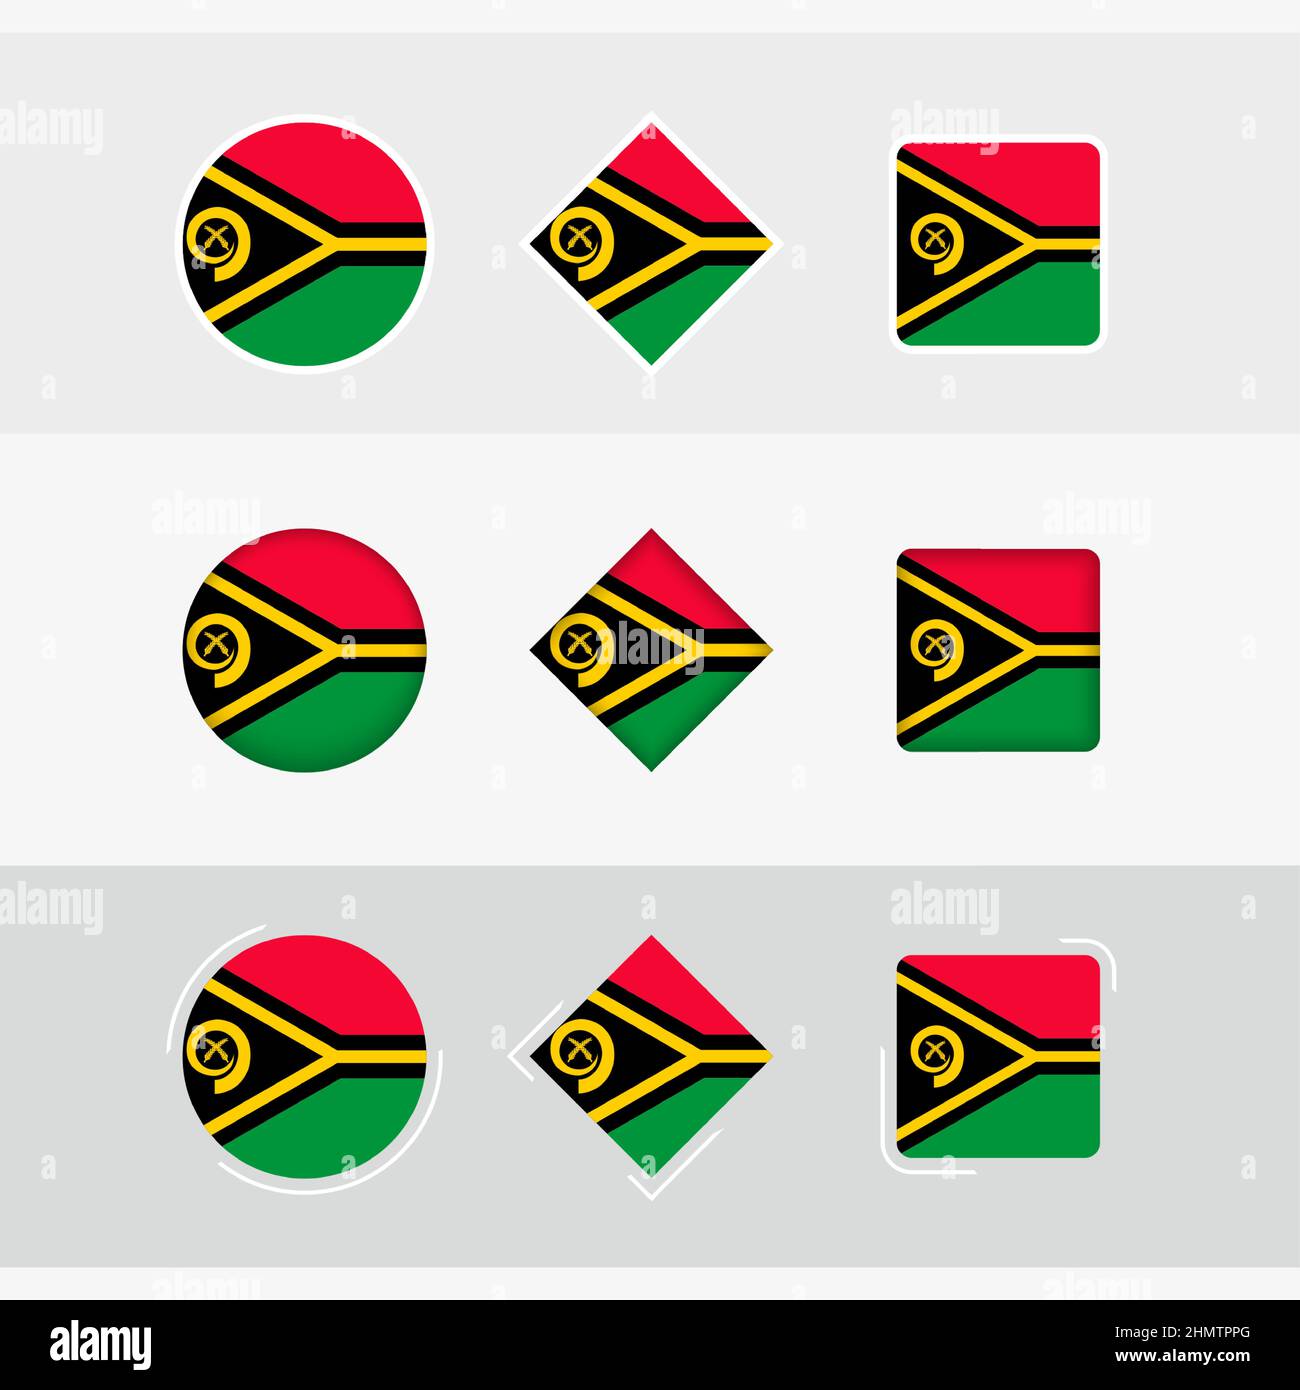 Vanuatu Flag Icons gesetzt, Vektorflagge von Vanuatu. Drei Versionen von Icon. Stock Vektor